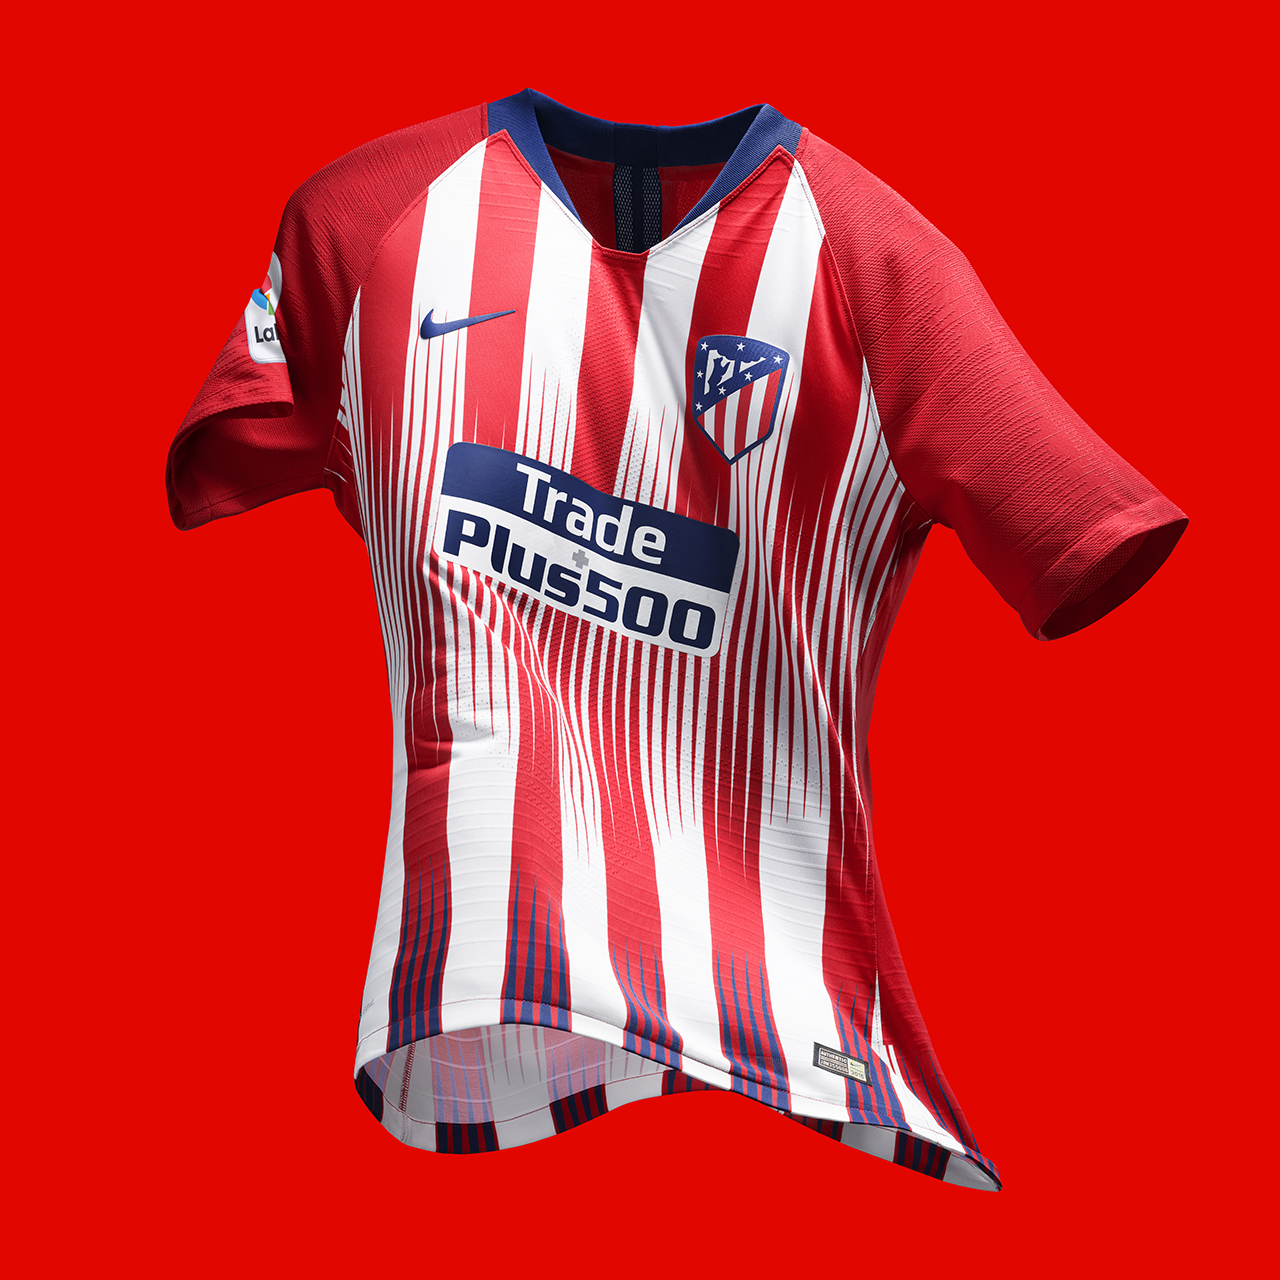 Camiseta Nike del Atlético de Madrid 2018 19